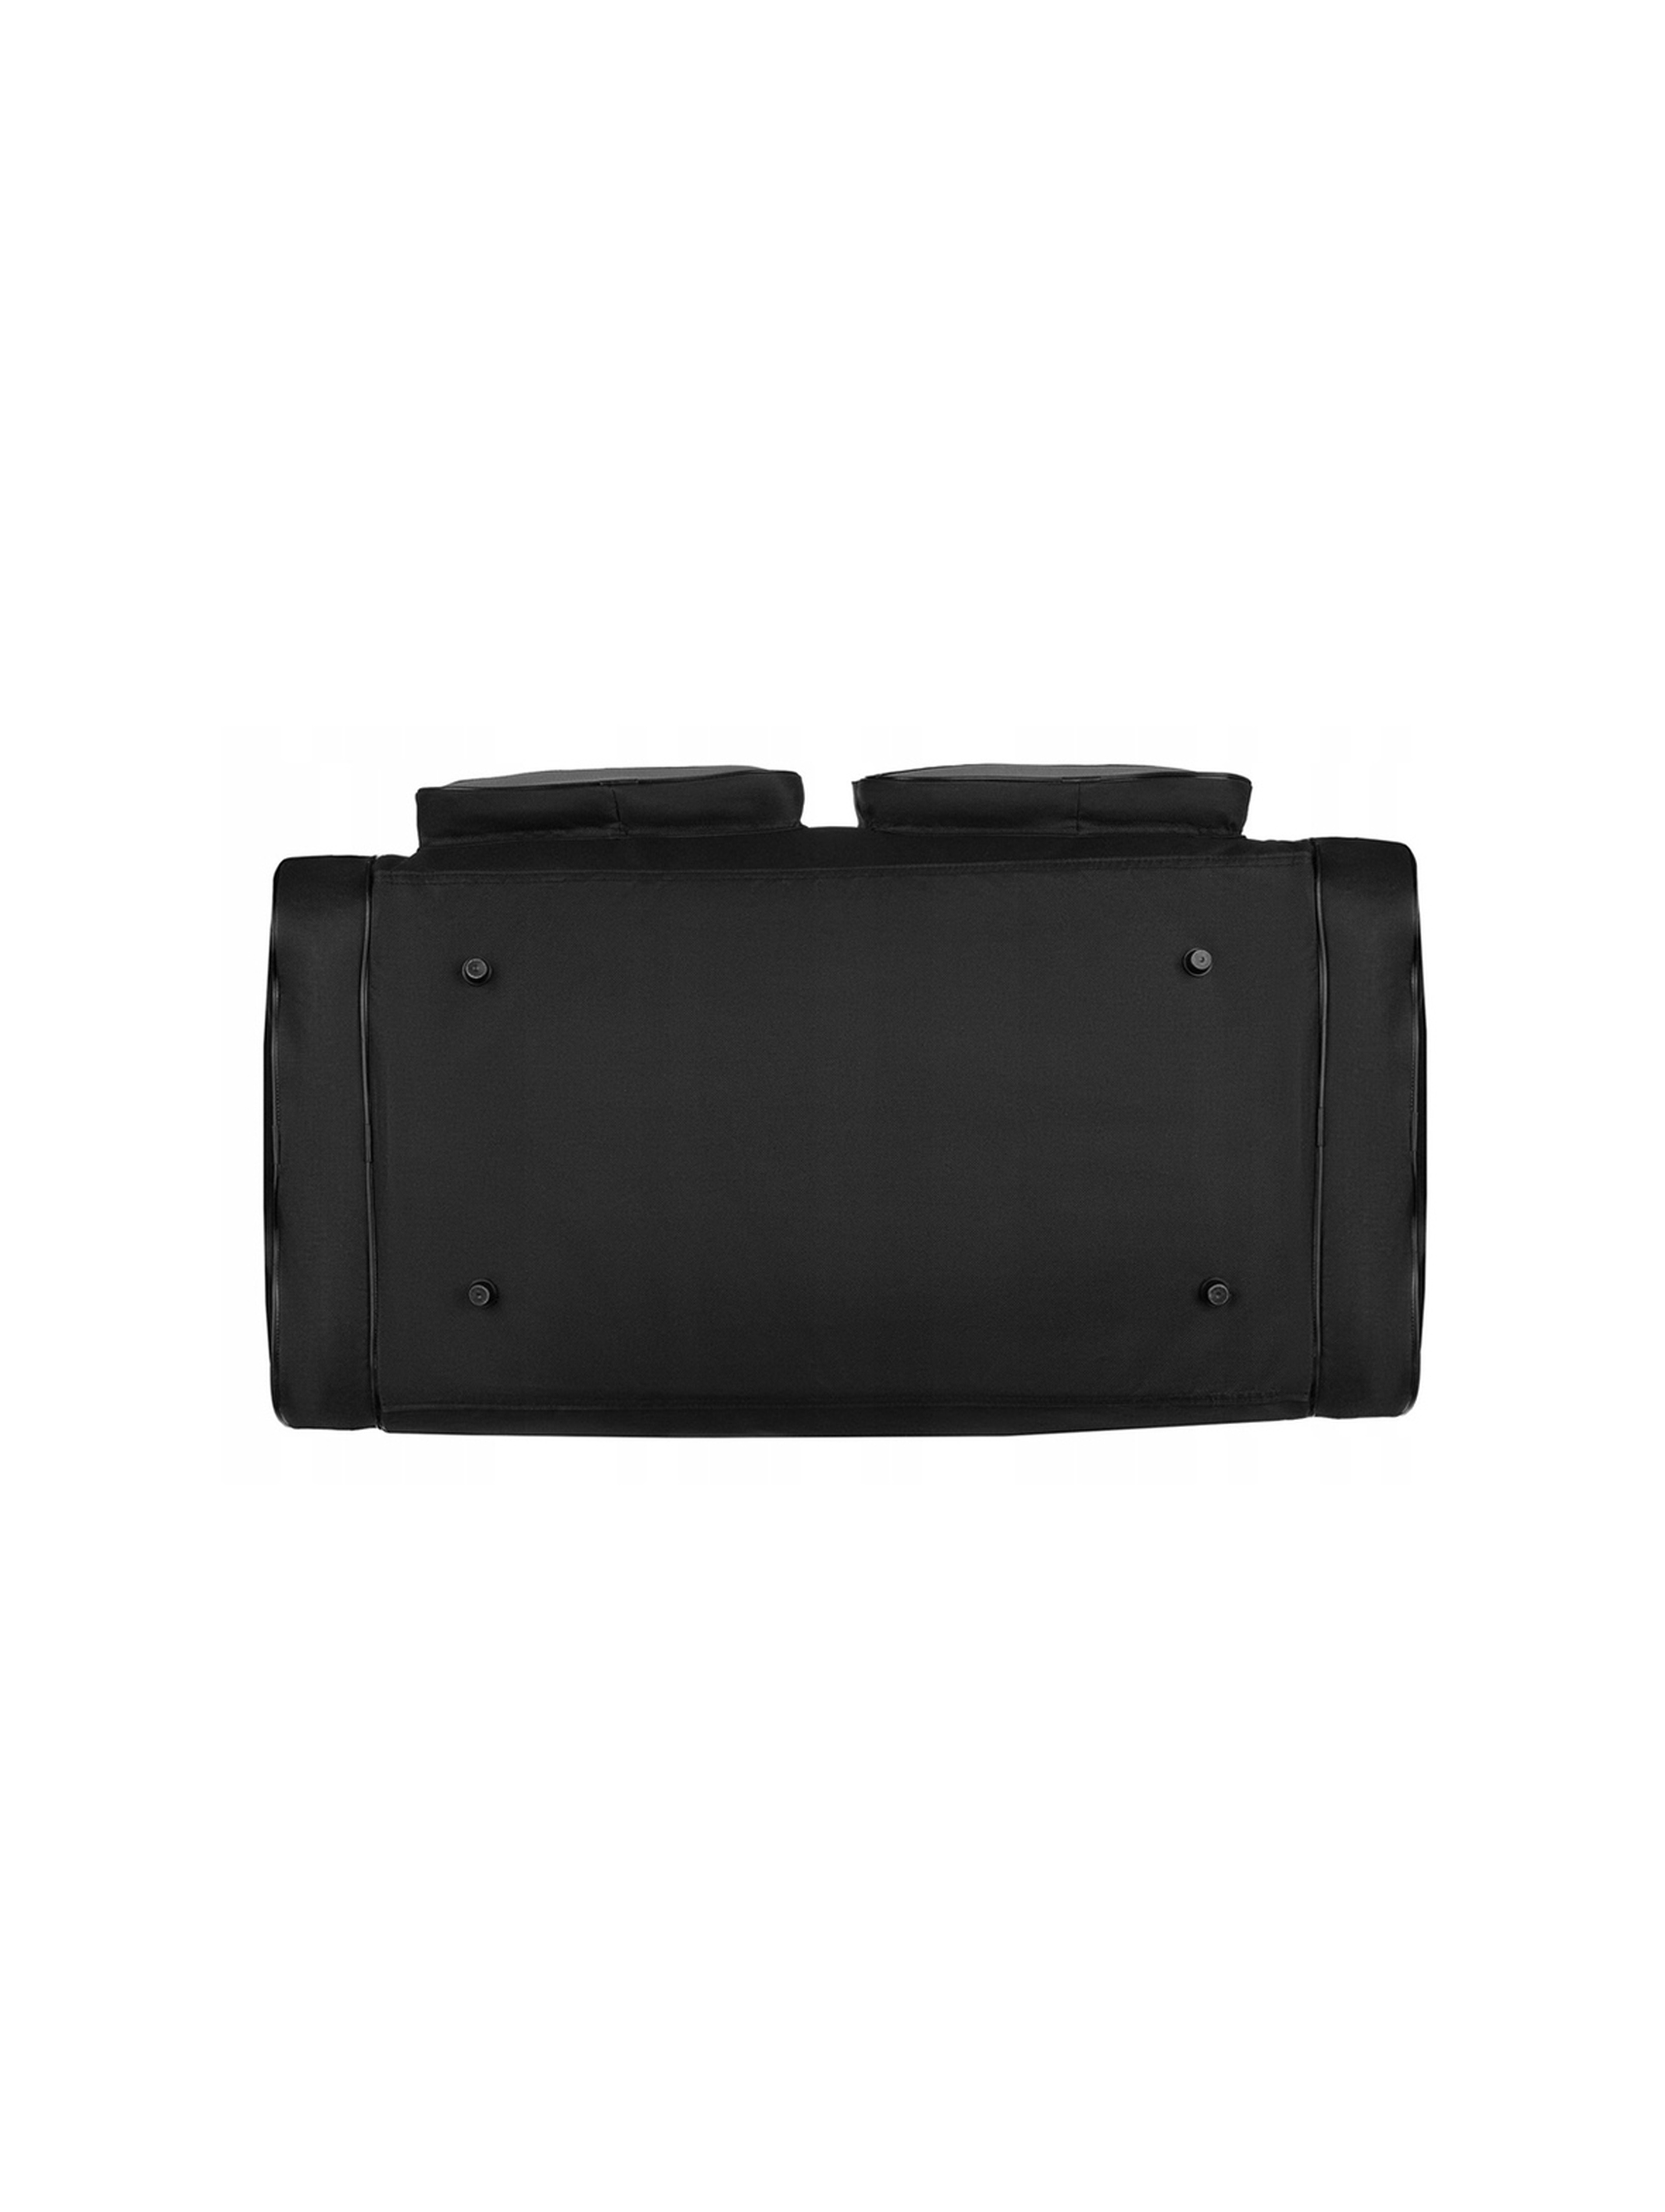 Duża, praktyczna torba podróżna z poliestru — Rovicky czarna